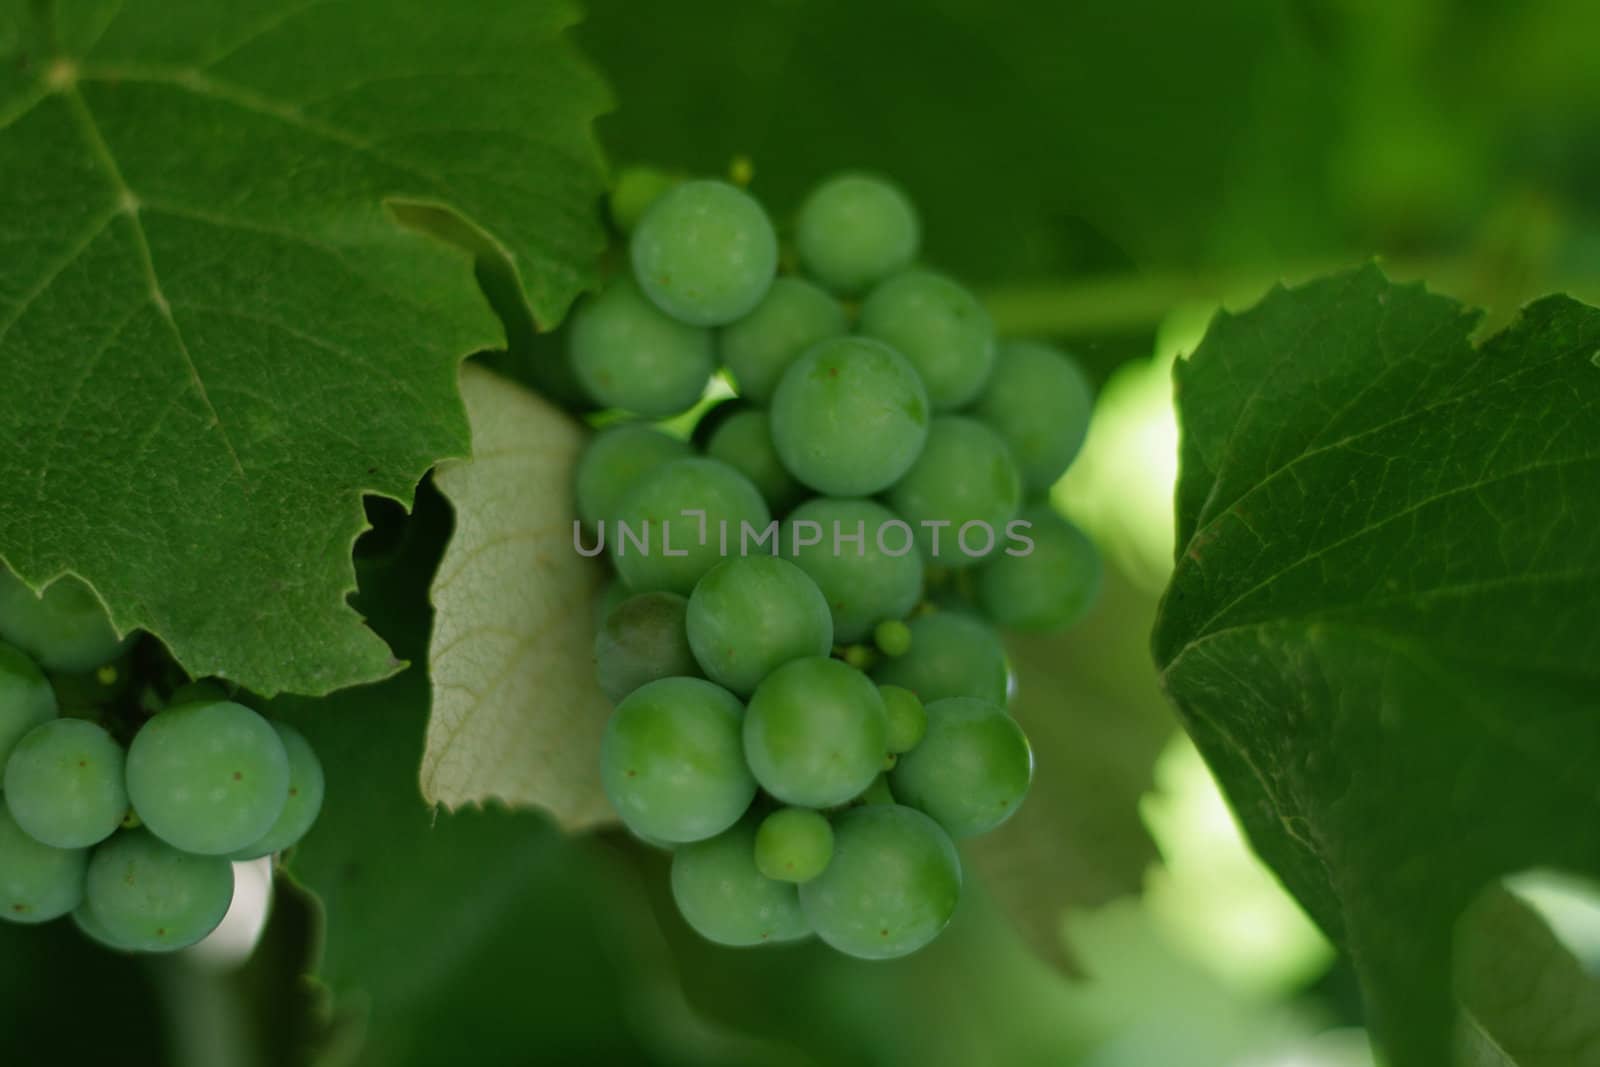 grapes by KadunmatriX